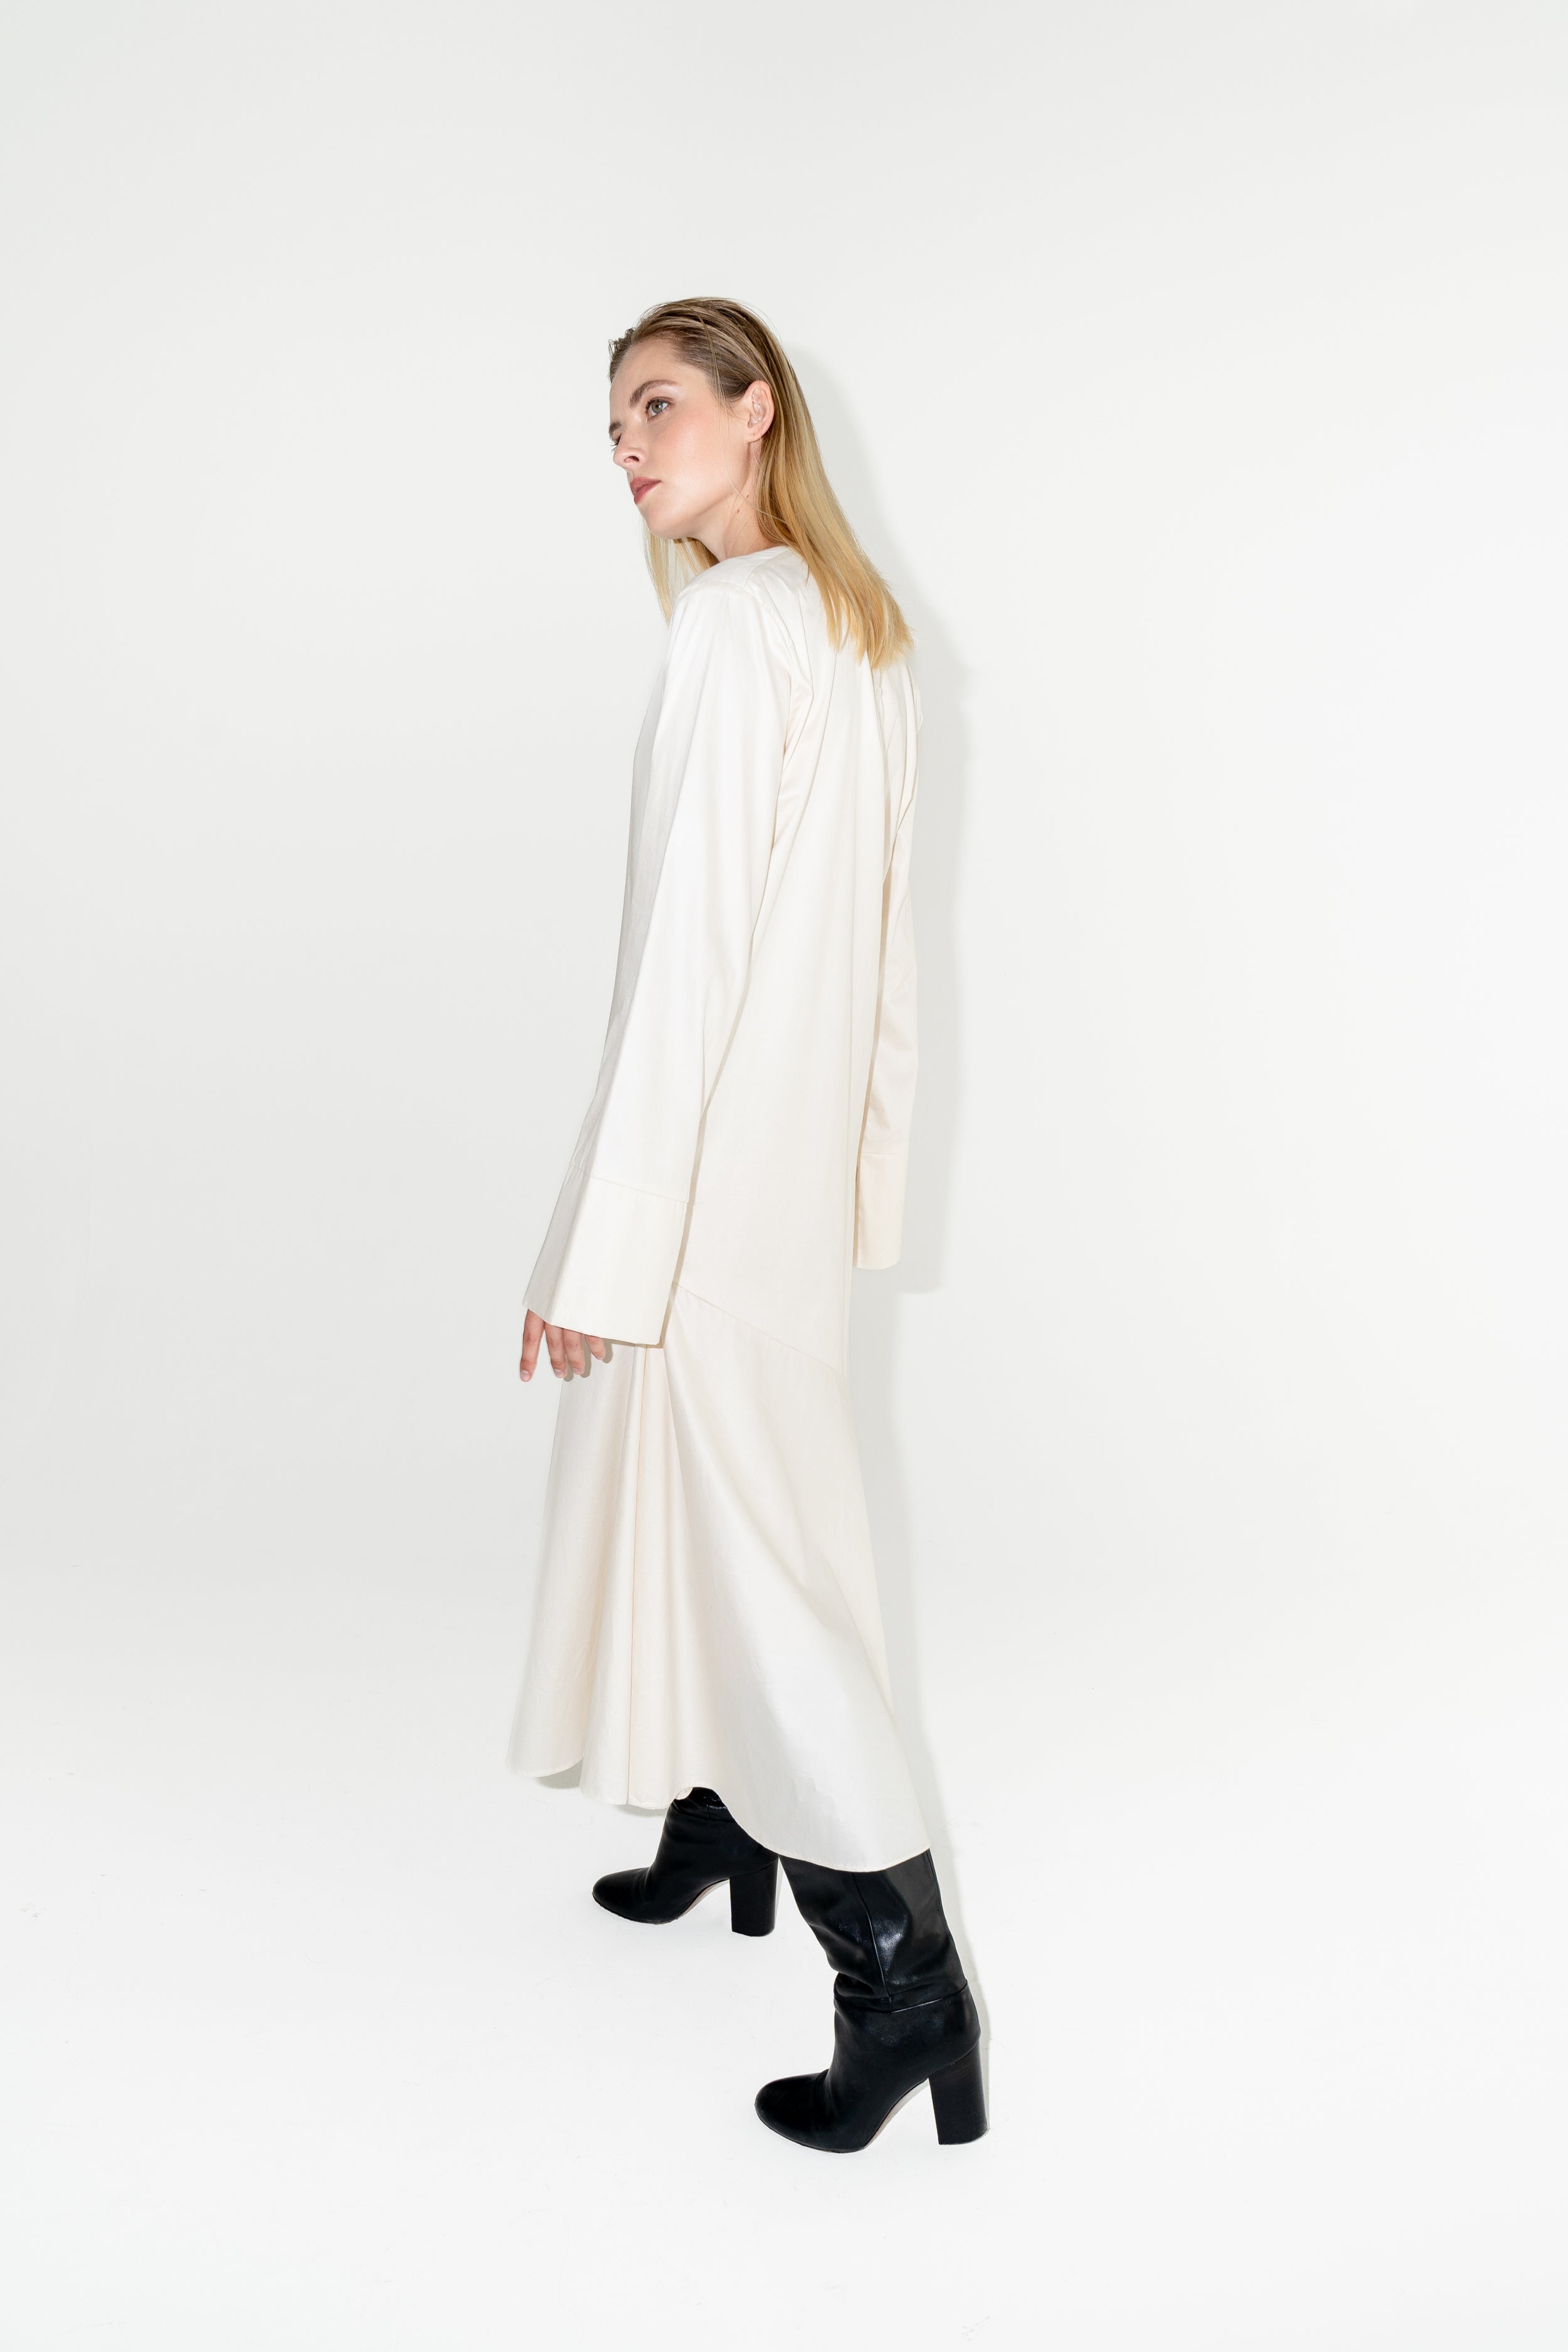 Udržitelné dámské bílé dlouhé šaty s dlouhým rukávem ADVA Studios z organické bavlny s výraznými černými kozačkami.